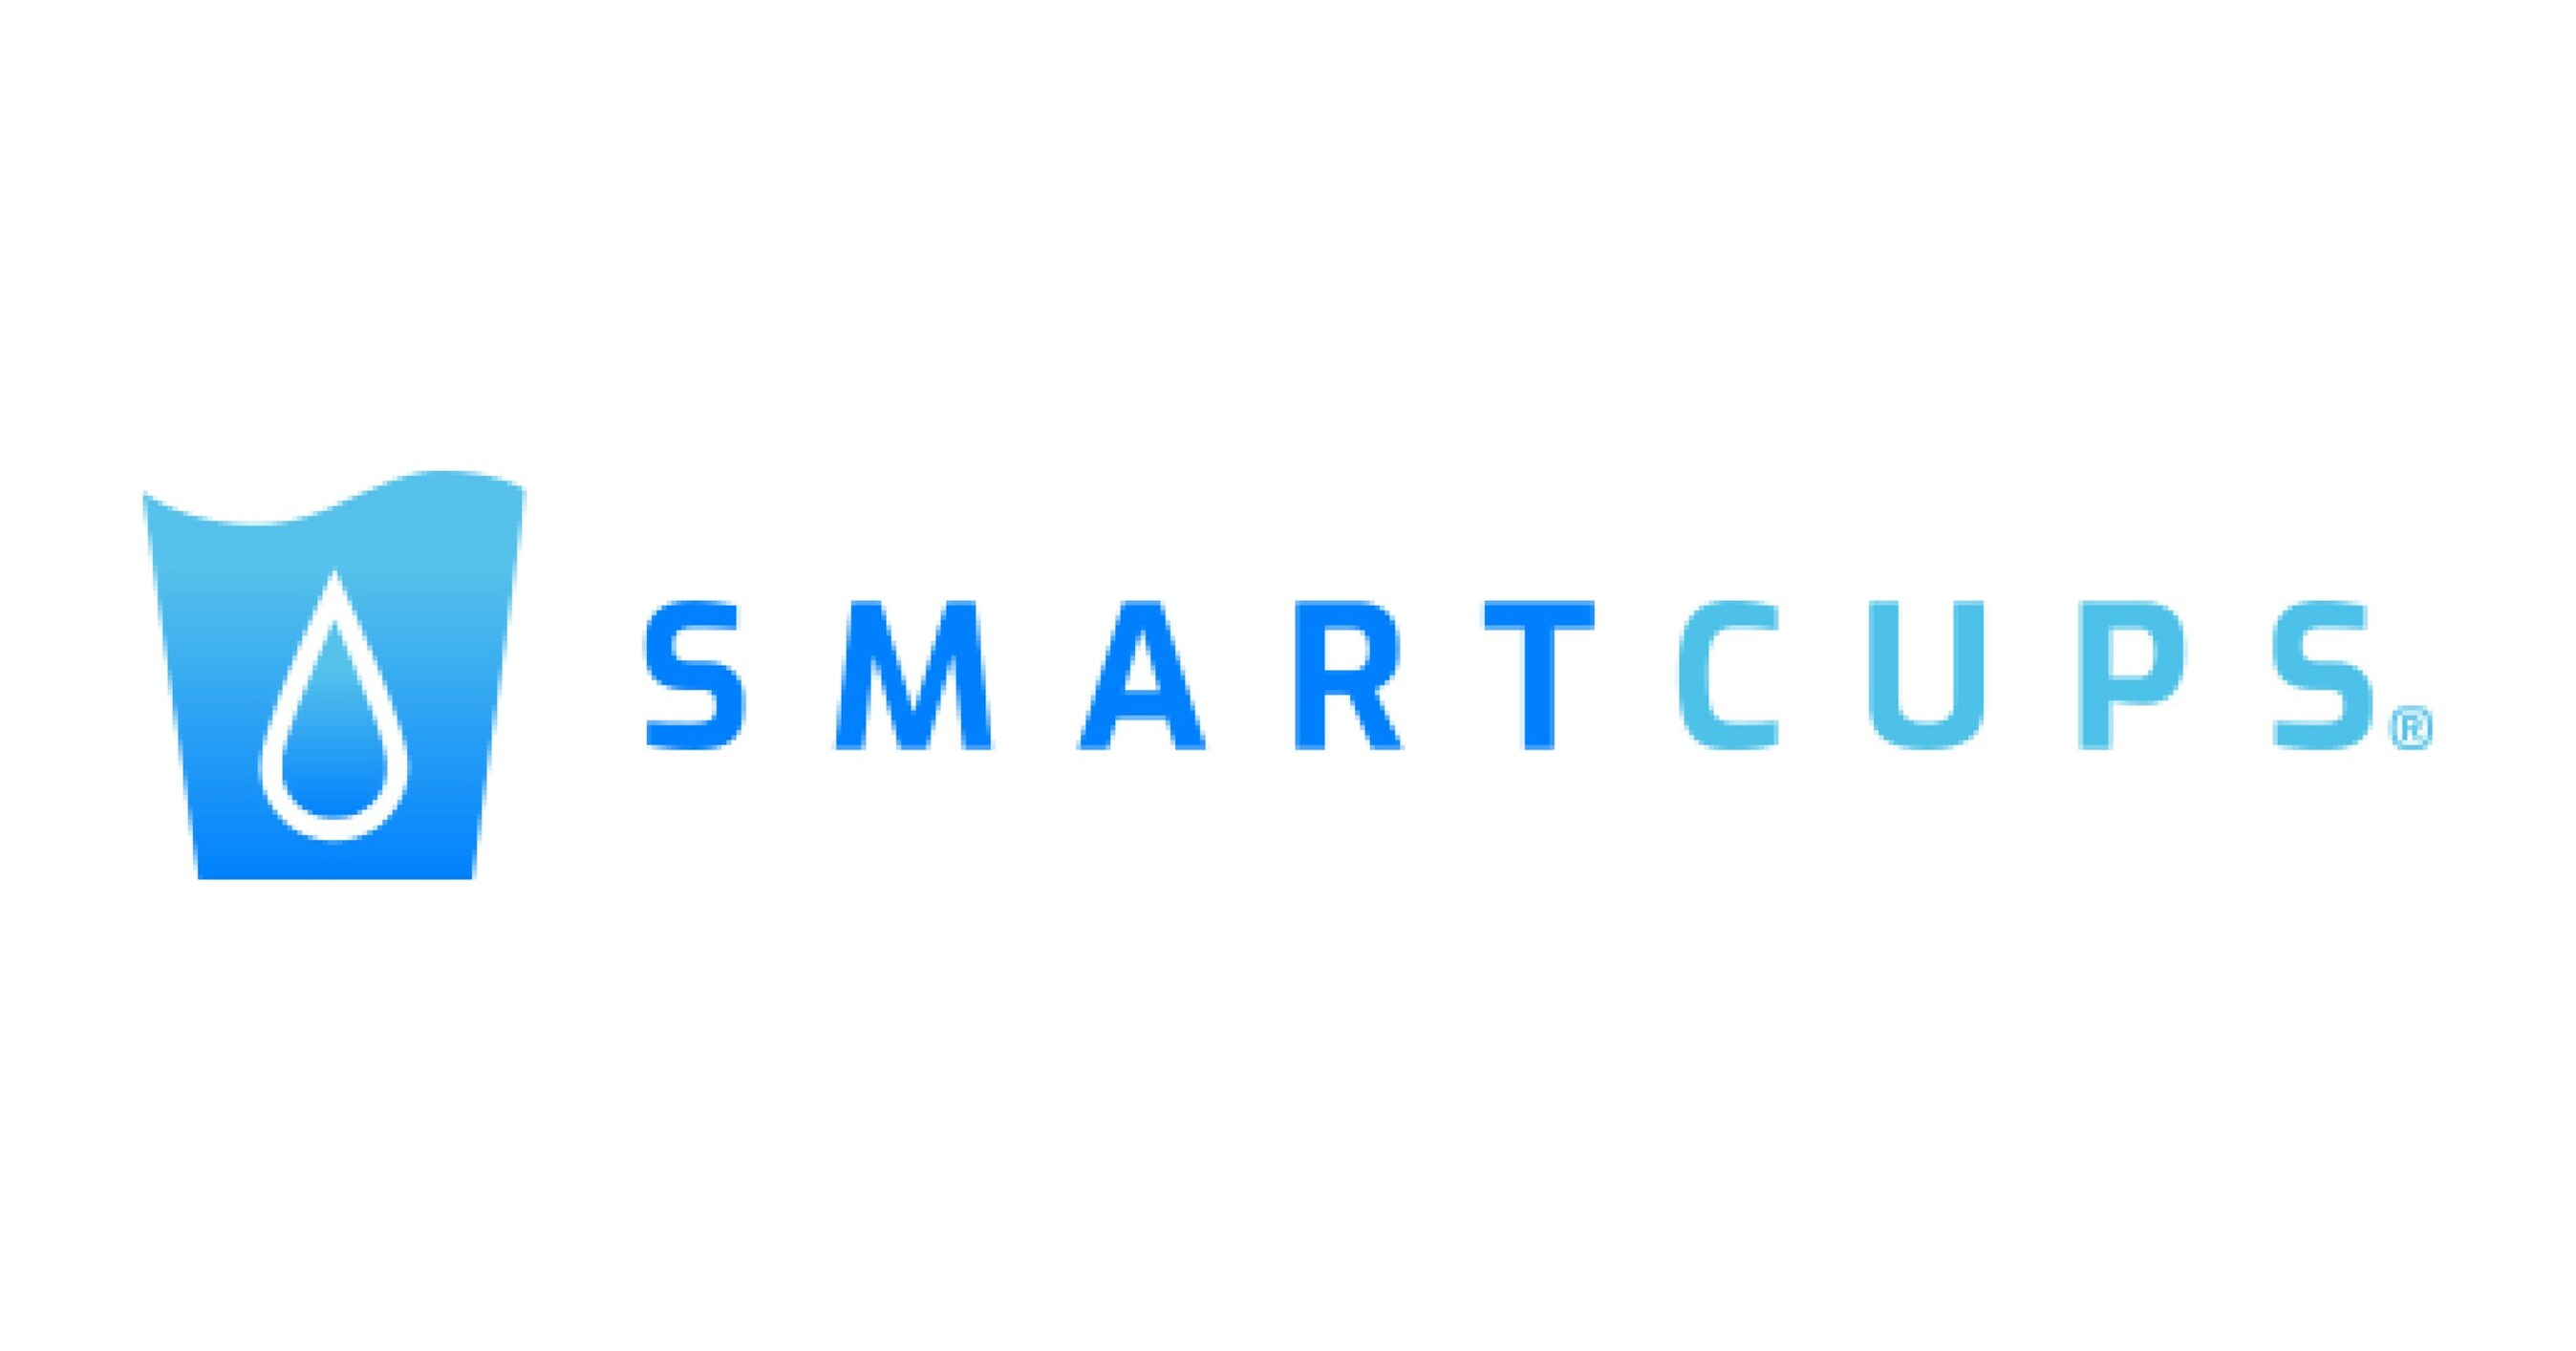 https://mma.prnewswire.com/media/2159549/Smart_Cups_Logo.jpg?p=facebook